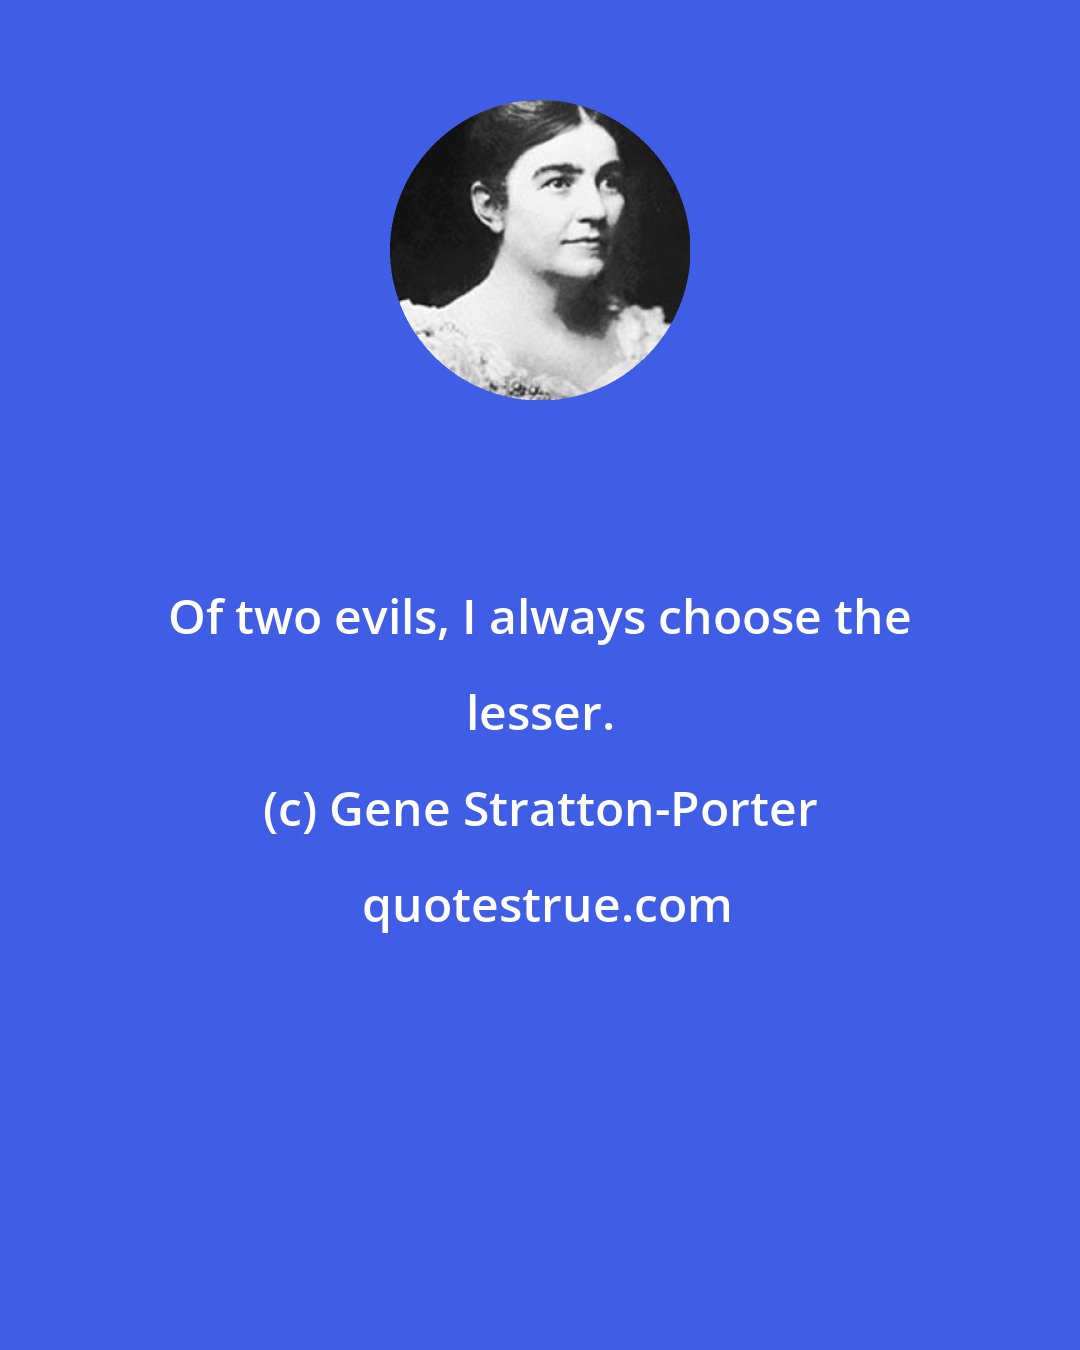 Gene Stratton-Porter: Of two evils, I always choose the lesser.